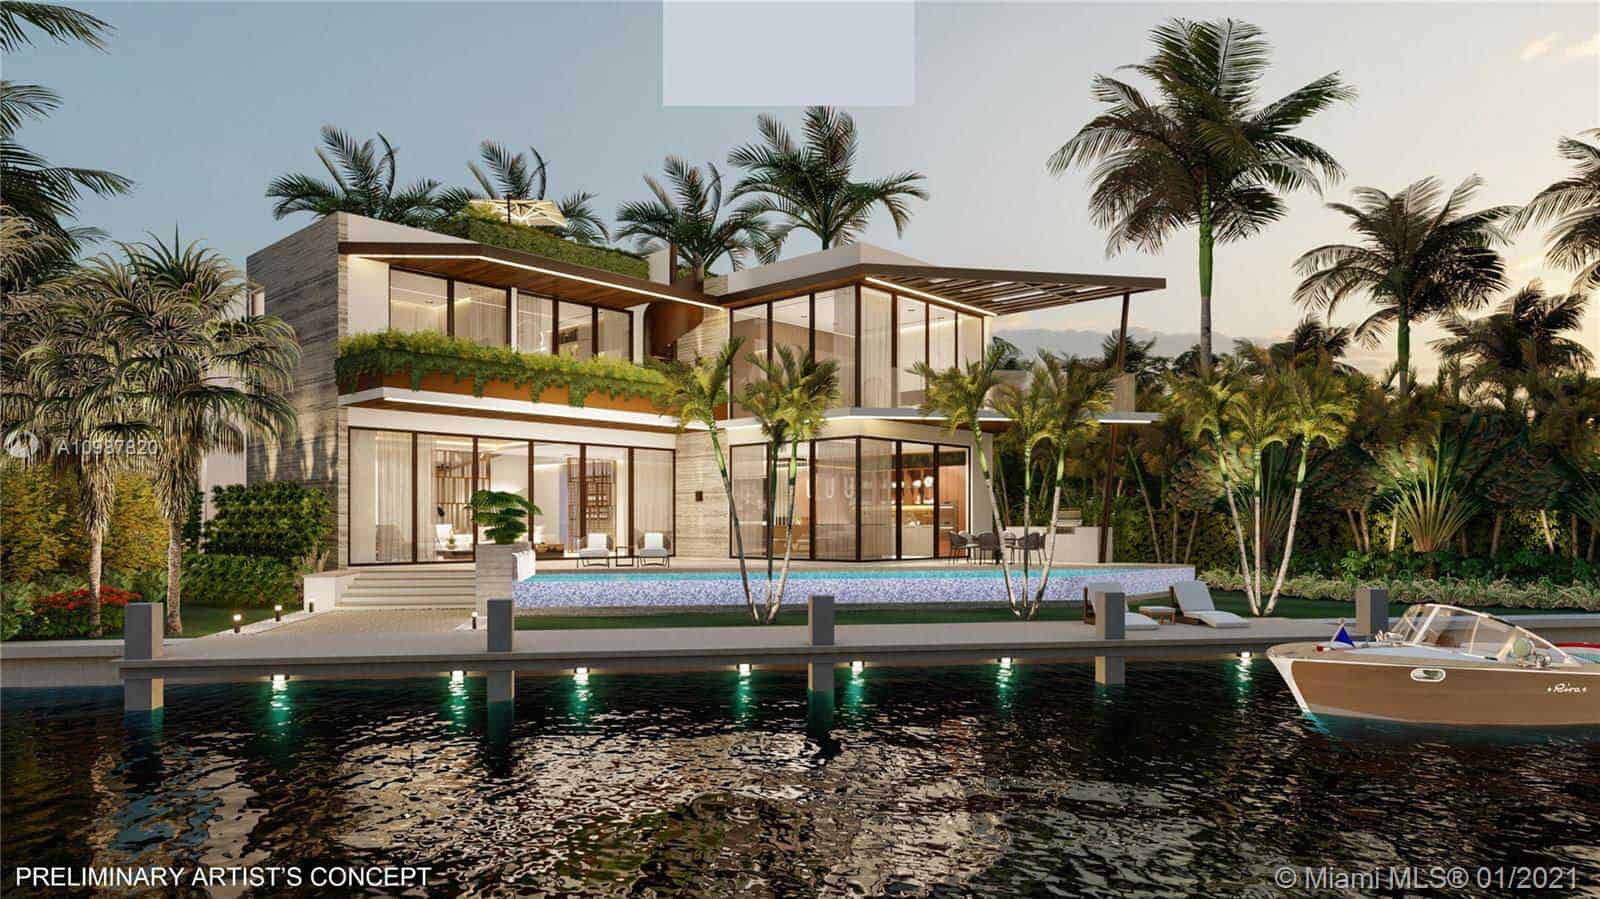 3172 N BAY RD, MIAMI BEACH, FL 33140: Ultra-Luxury Homes for Sale in Miami Beach